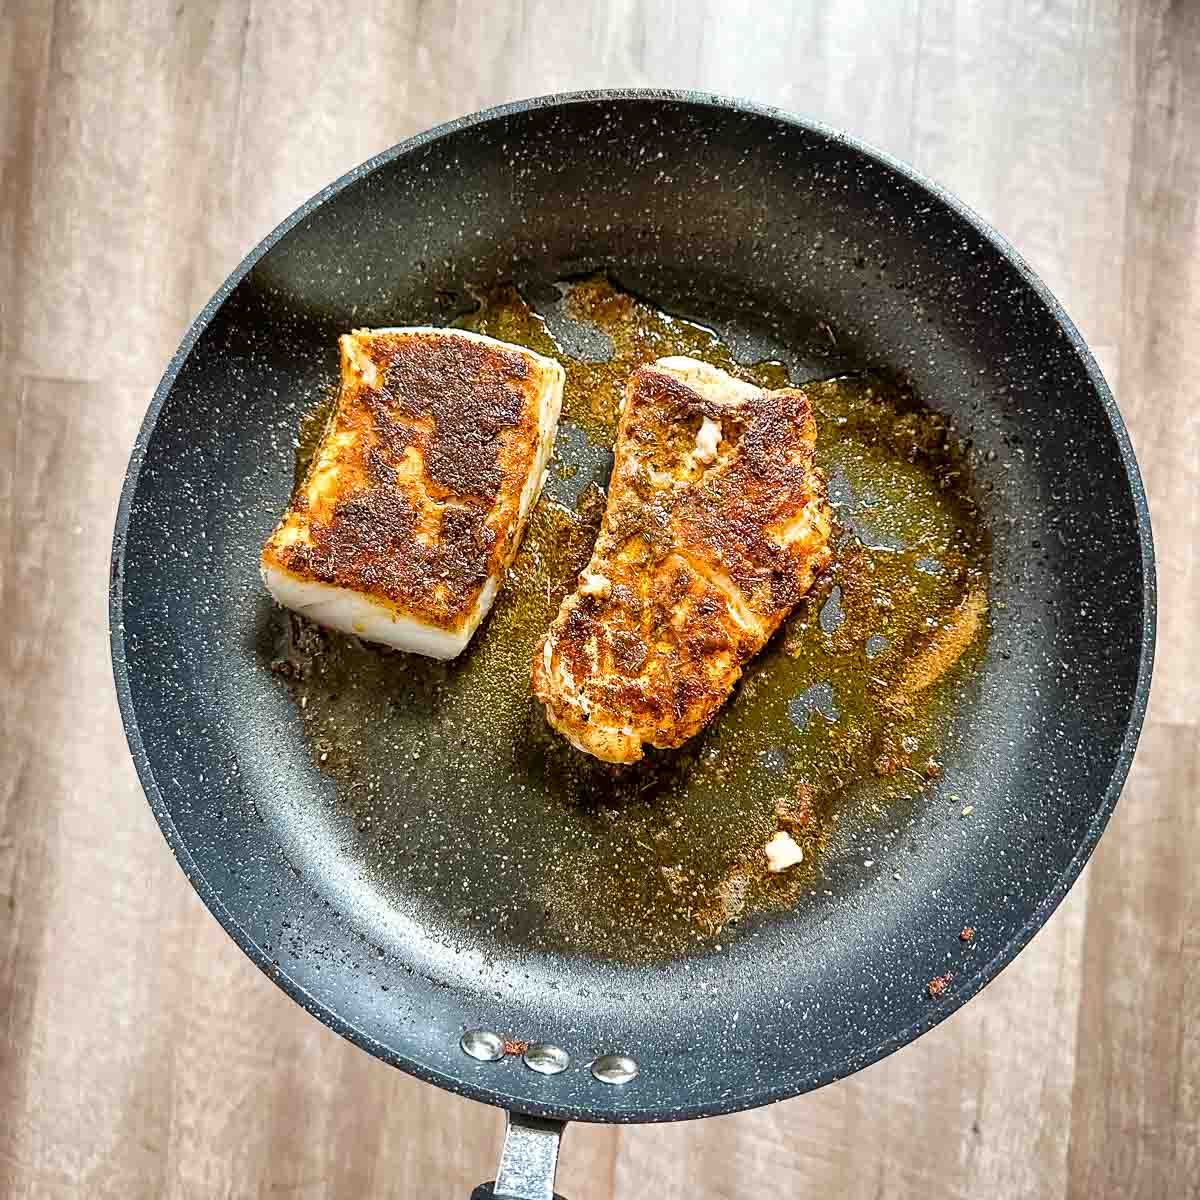 Blackened cod in a frying pan.